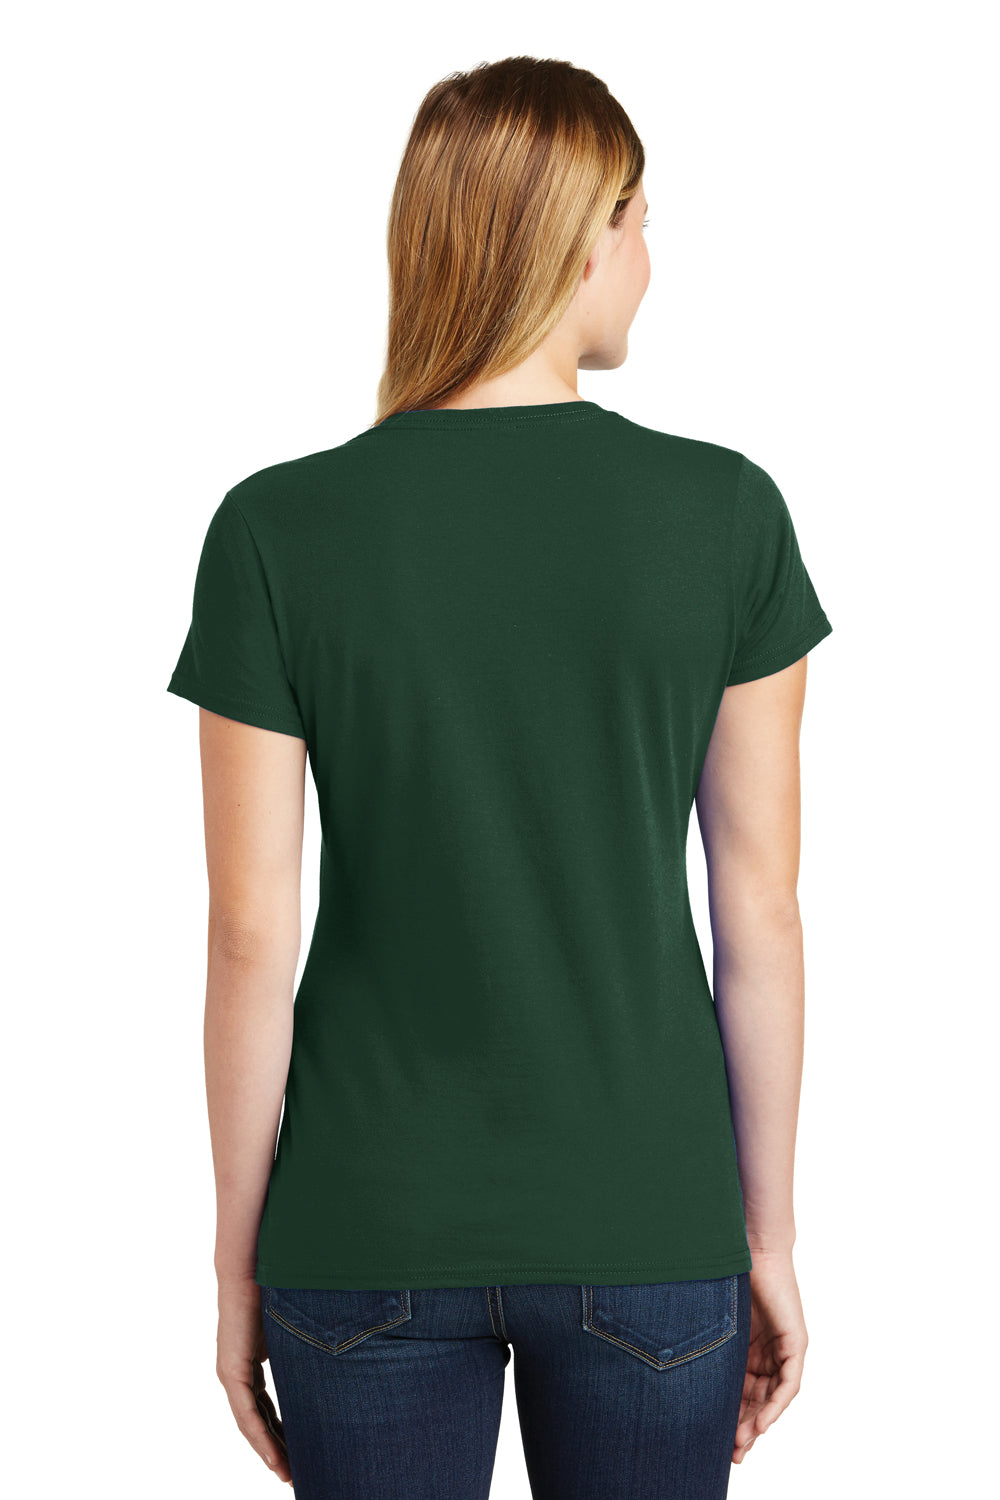 Port & Company LPC450 Womens Fan Favorite Short Sleeve Crewneck T-Shirt Forest Green Back